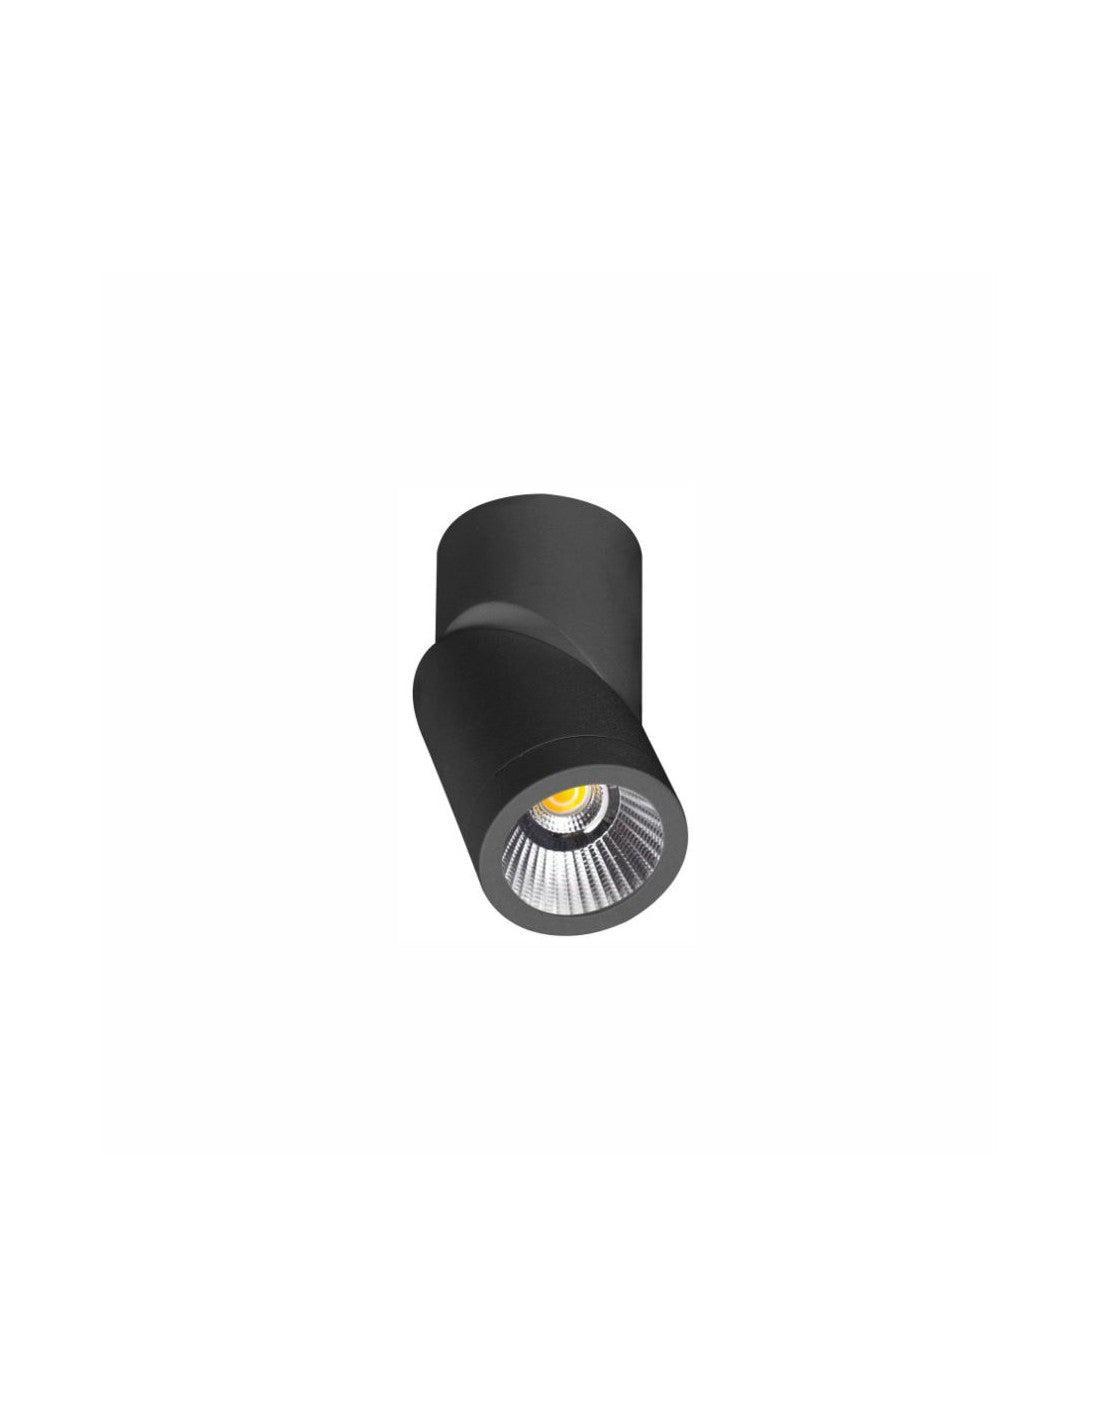 Applique Cylindrical Plus Black LED 8W Schalter Faure FIure - 4523